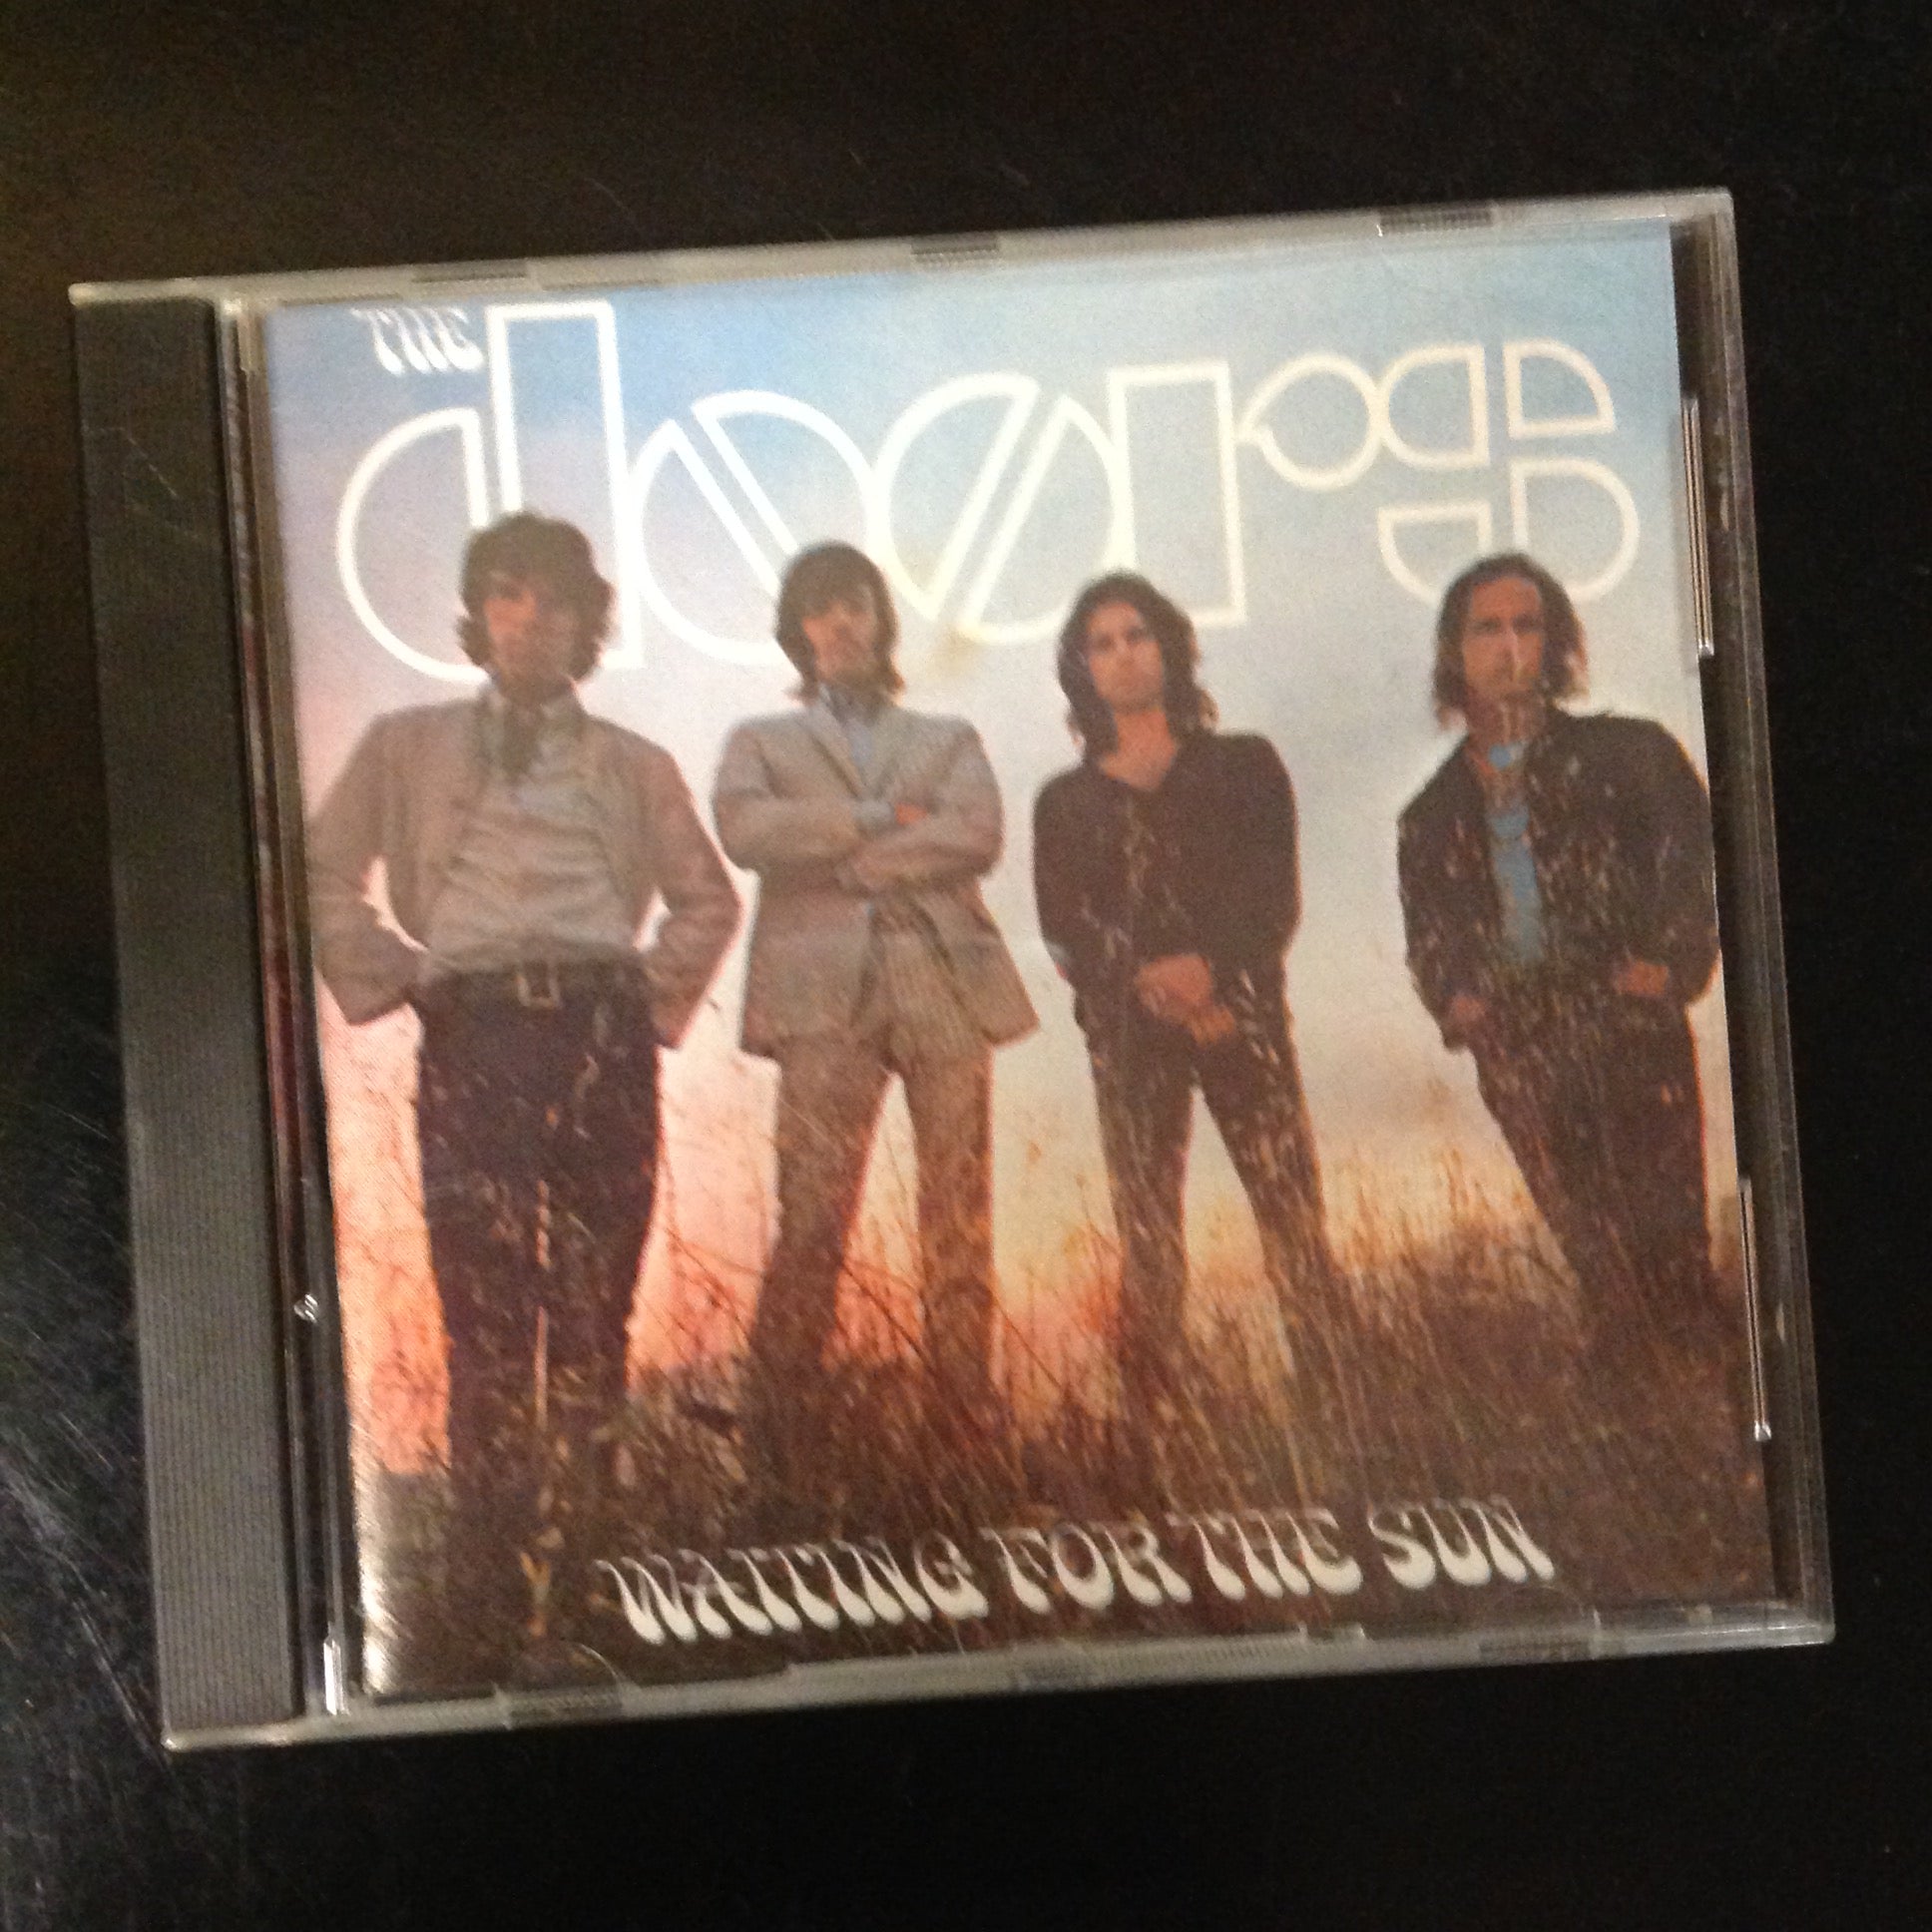 CD The Doors Waiting For The Sun 974024-2 ELektra Classic Rock